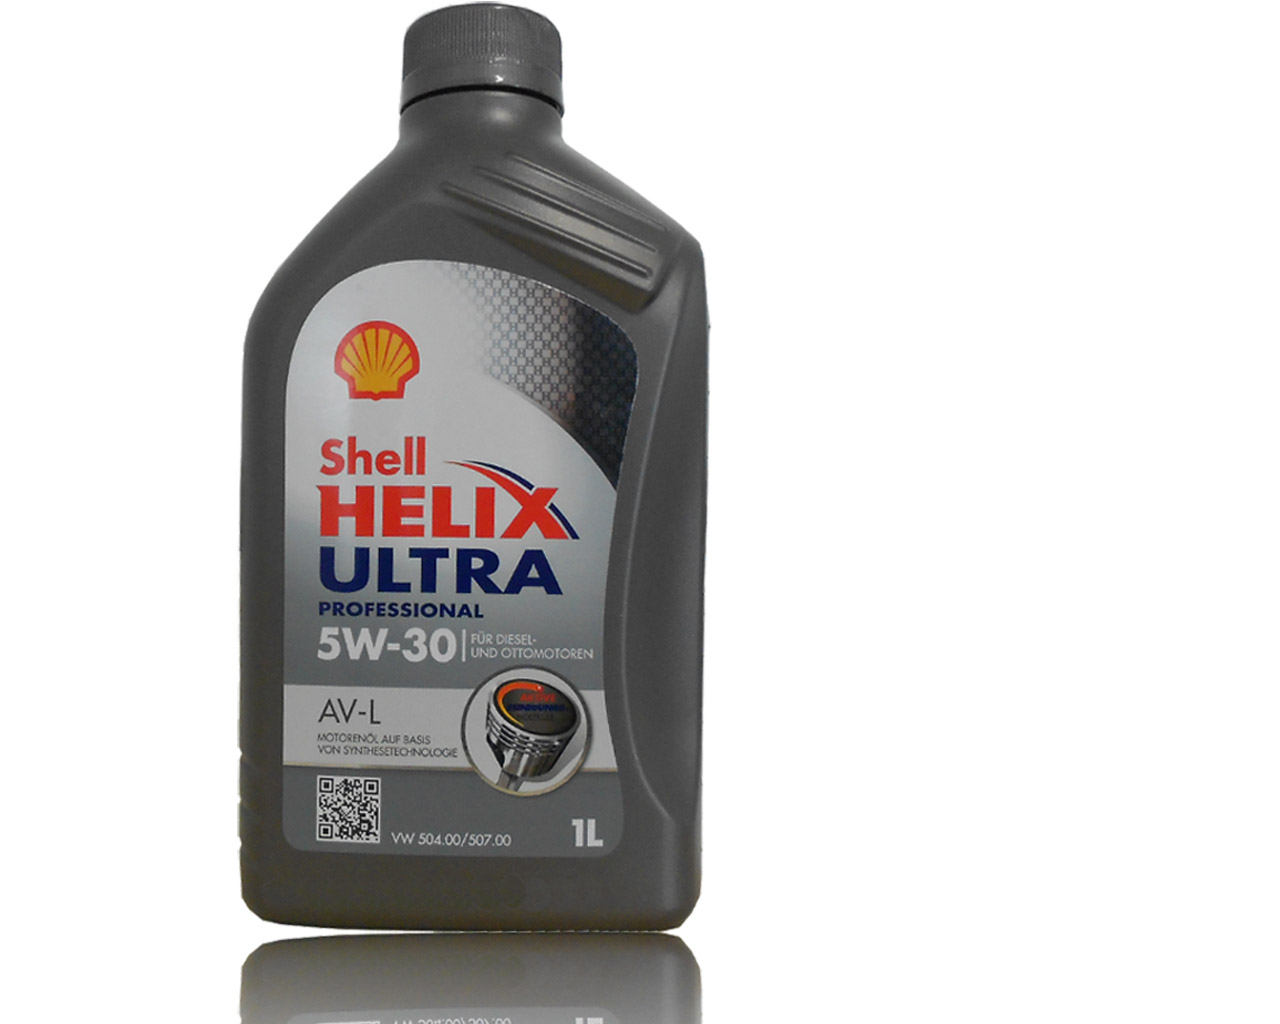 Helix ultra am l. Shell Ultra 5w30 professional. Масло моторное 5w30 Шелл Хеликс ультра профессионал. Shell Helix Ultra 5w30 ll-04. Моторное масло Shell Helix Ultra 5w-30.